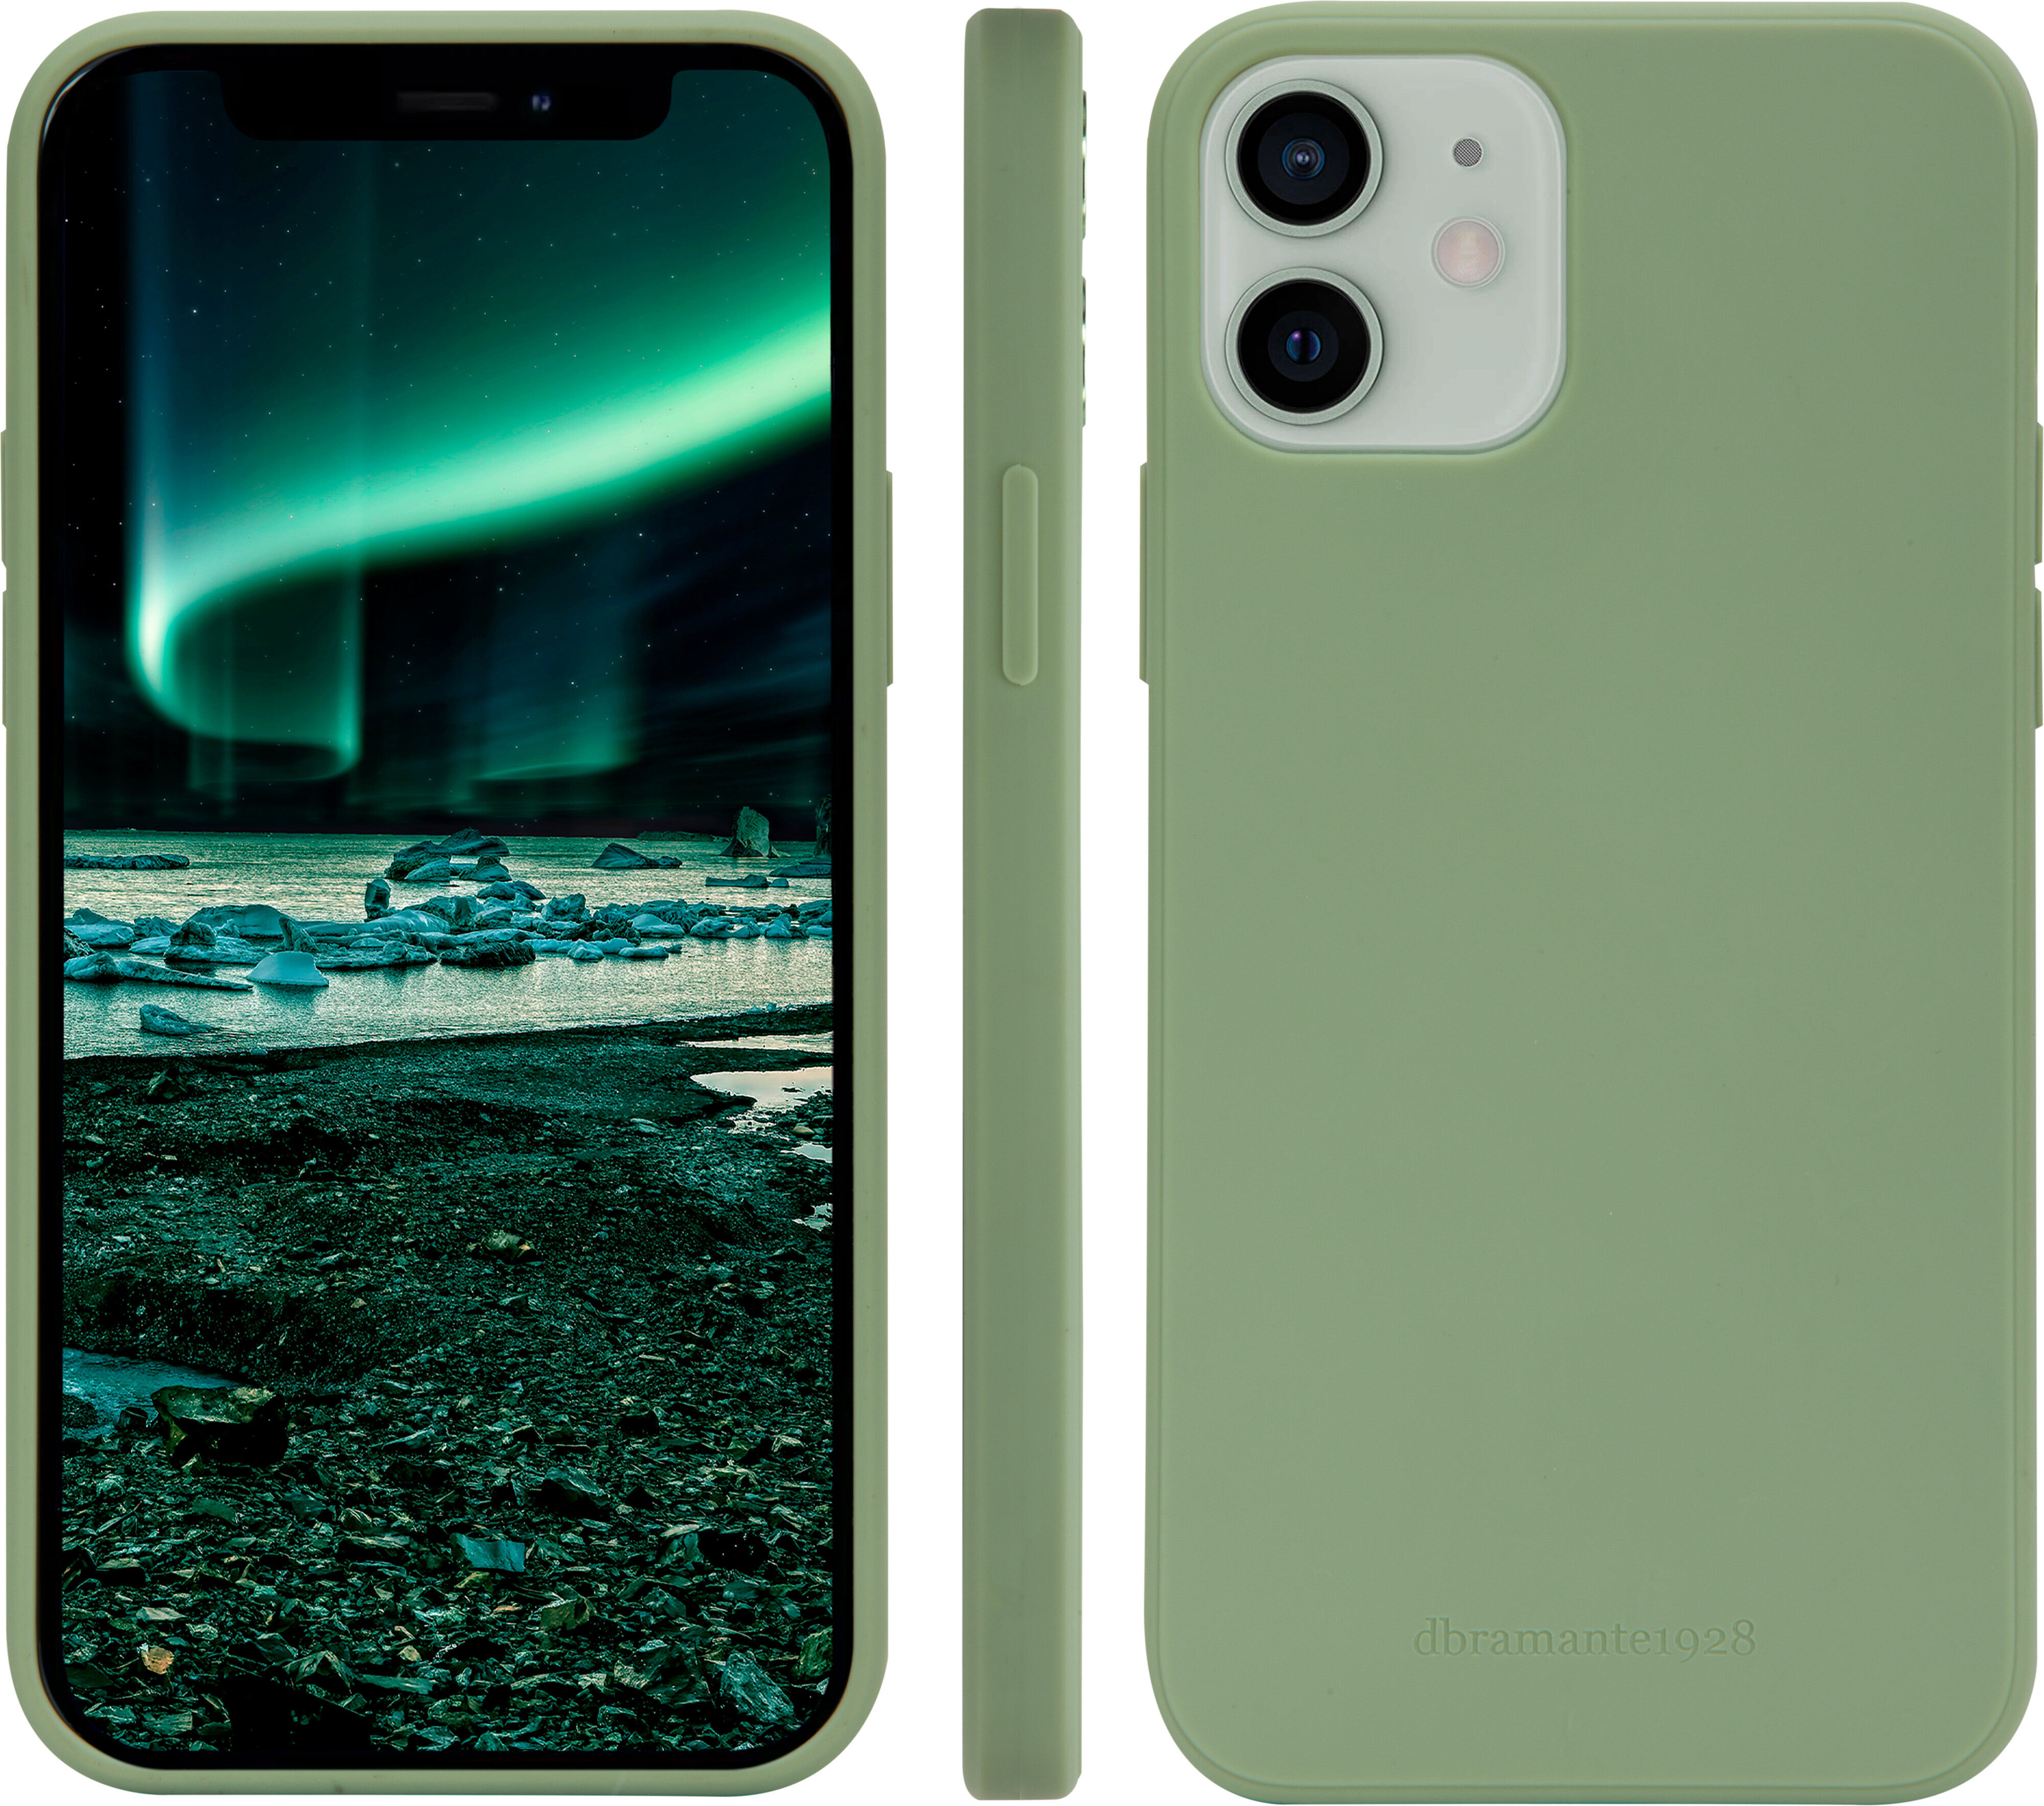 Dbramante1928 Greenland -suojakuori, iPhone 12 mini, vihreä 19,90